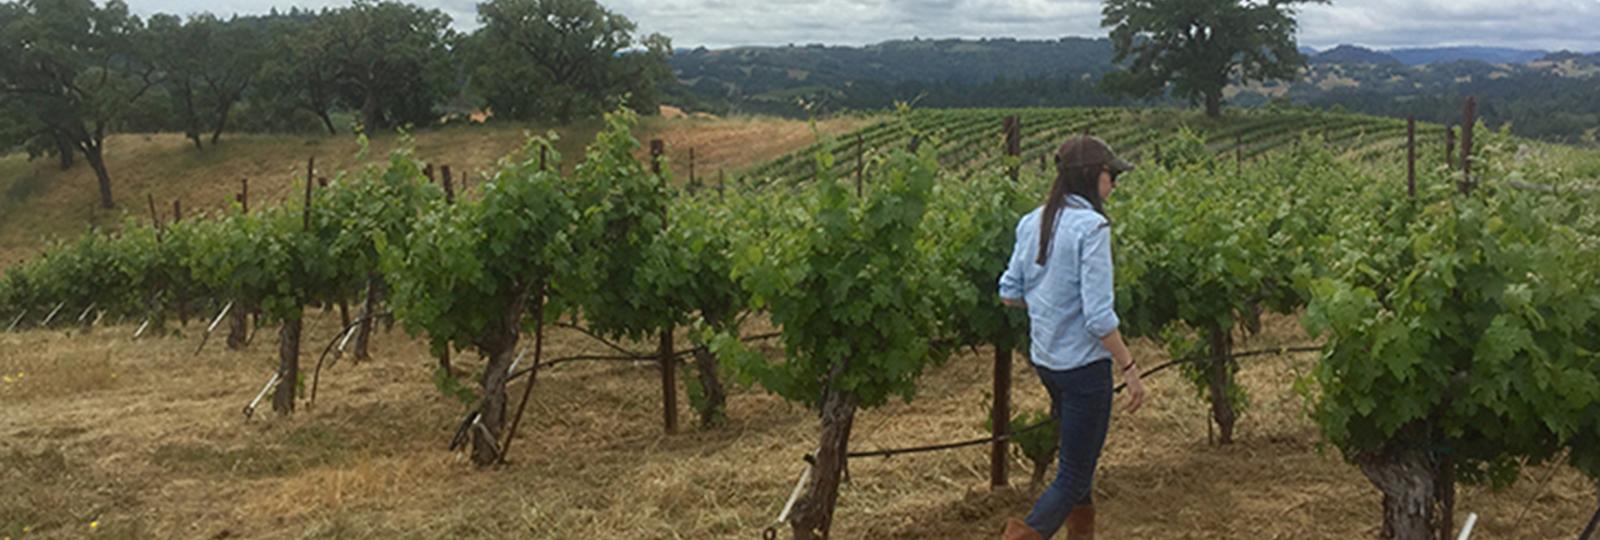 Arrowood Winemaker, Kristina Shideler, walking in Knights Valley Vineyard.